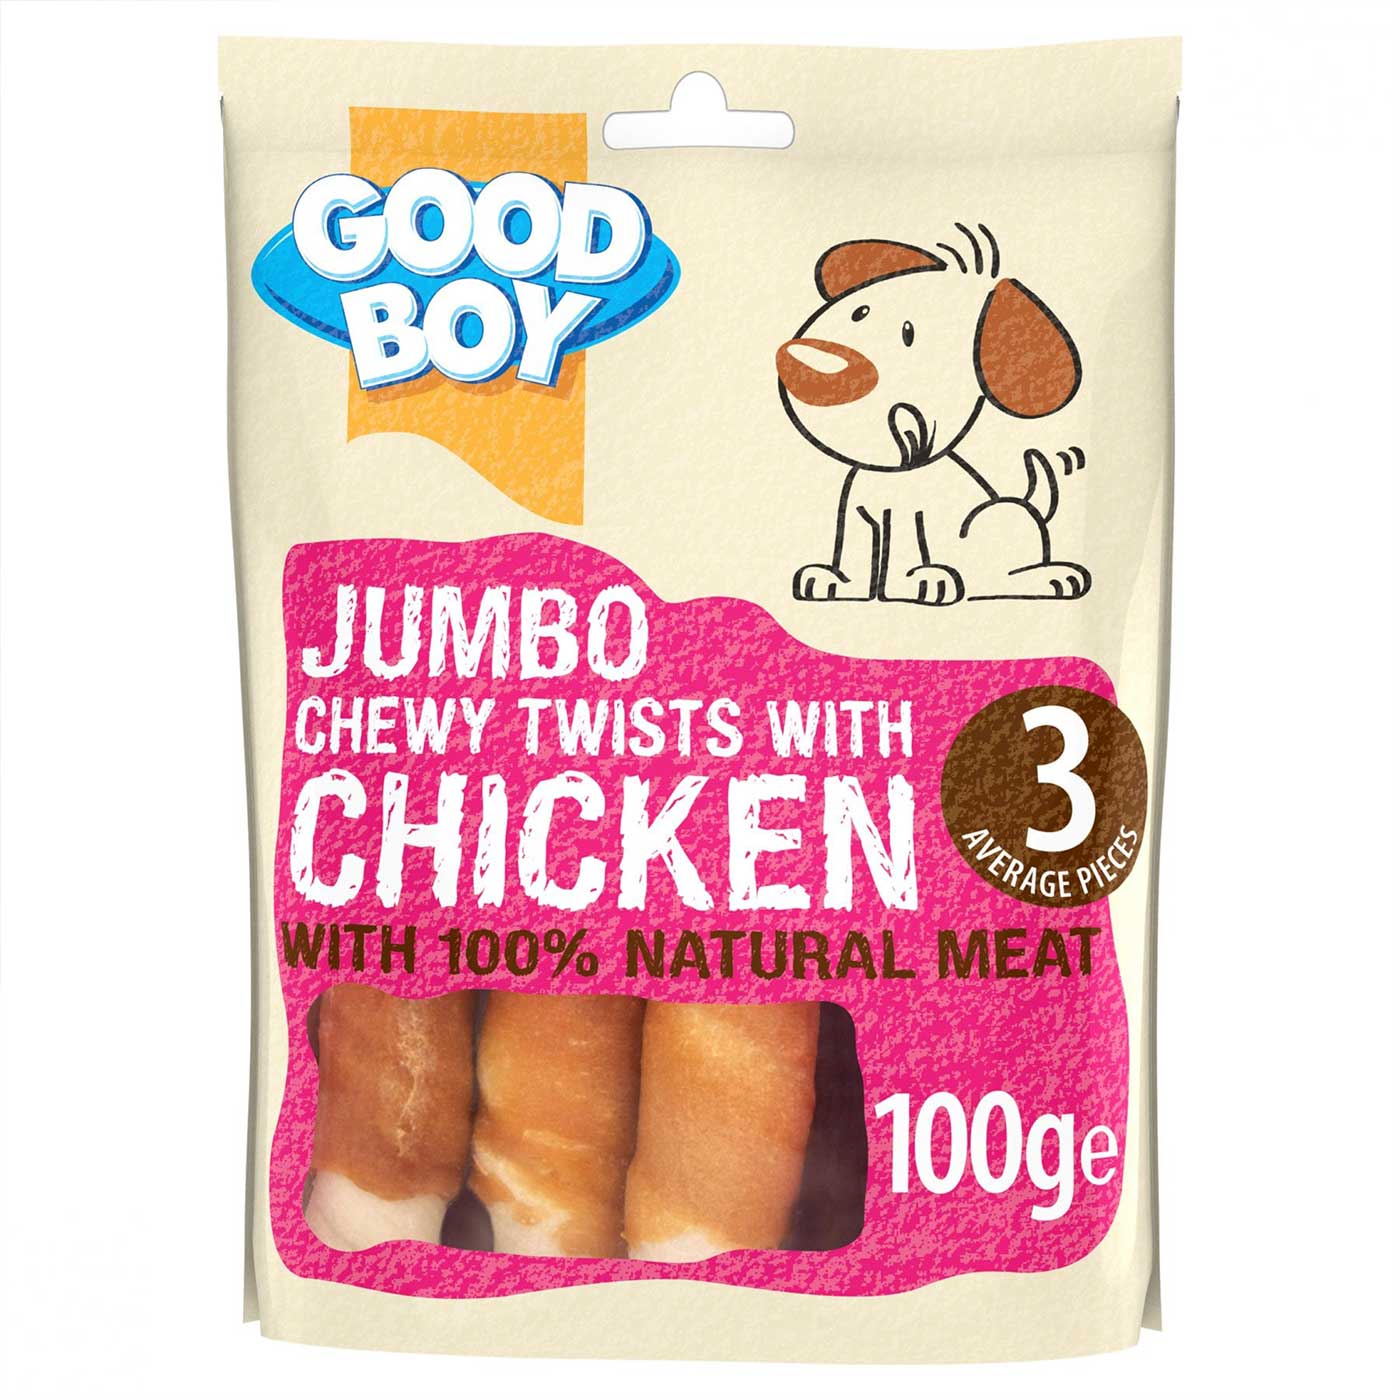 Good Boy Jumbo Chewy Twists with Chicken 100g